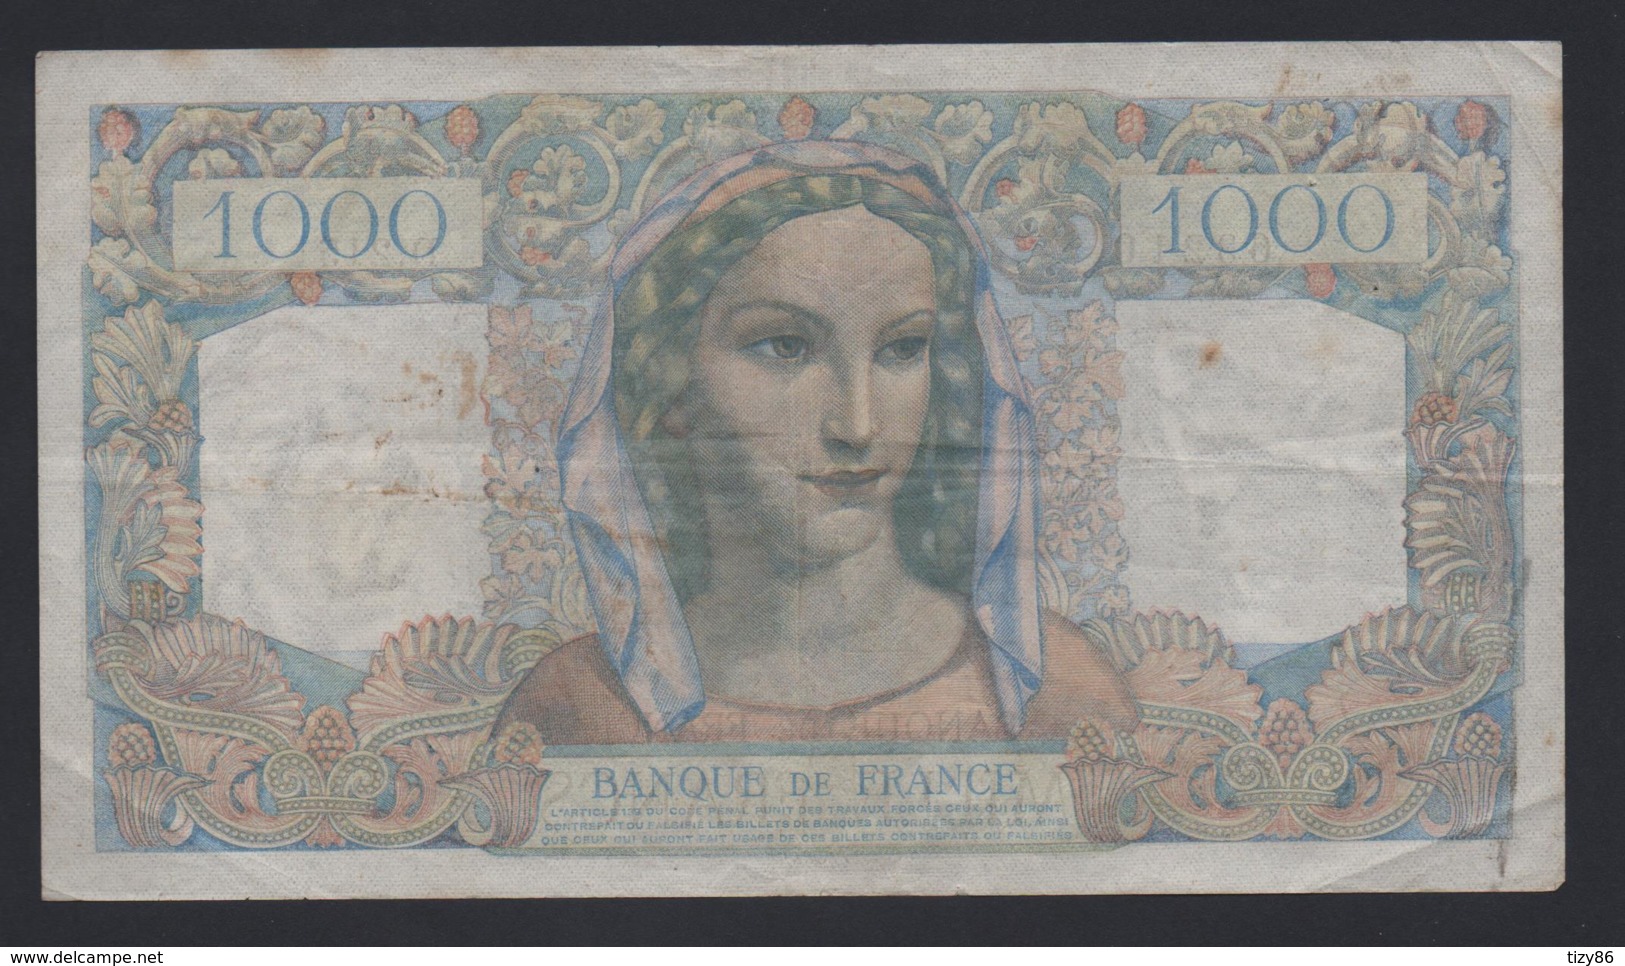 Banconota Francia 1000 Francs 1946 - 100 F 1945-1954 ''Jeune Paysan''